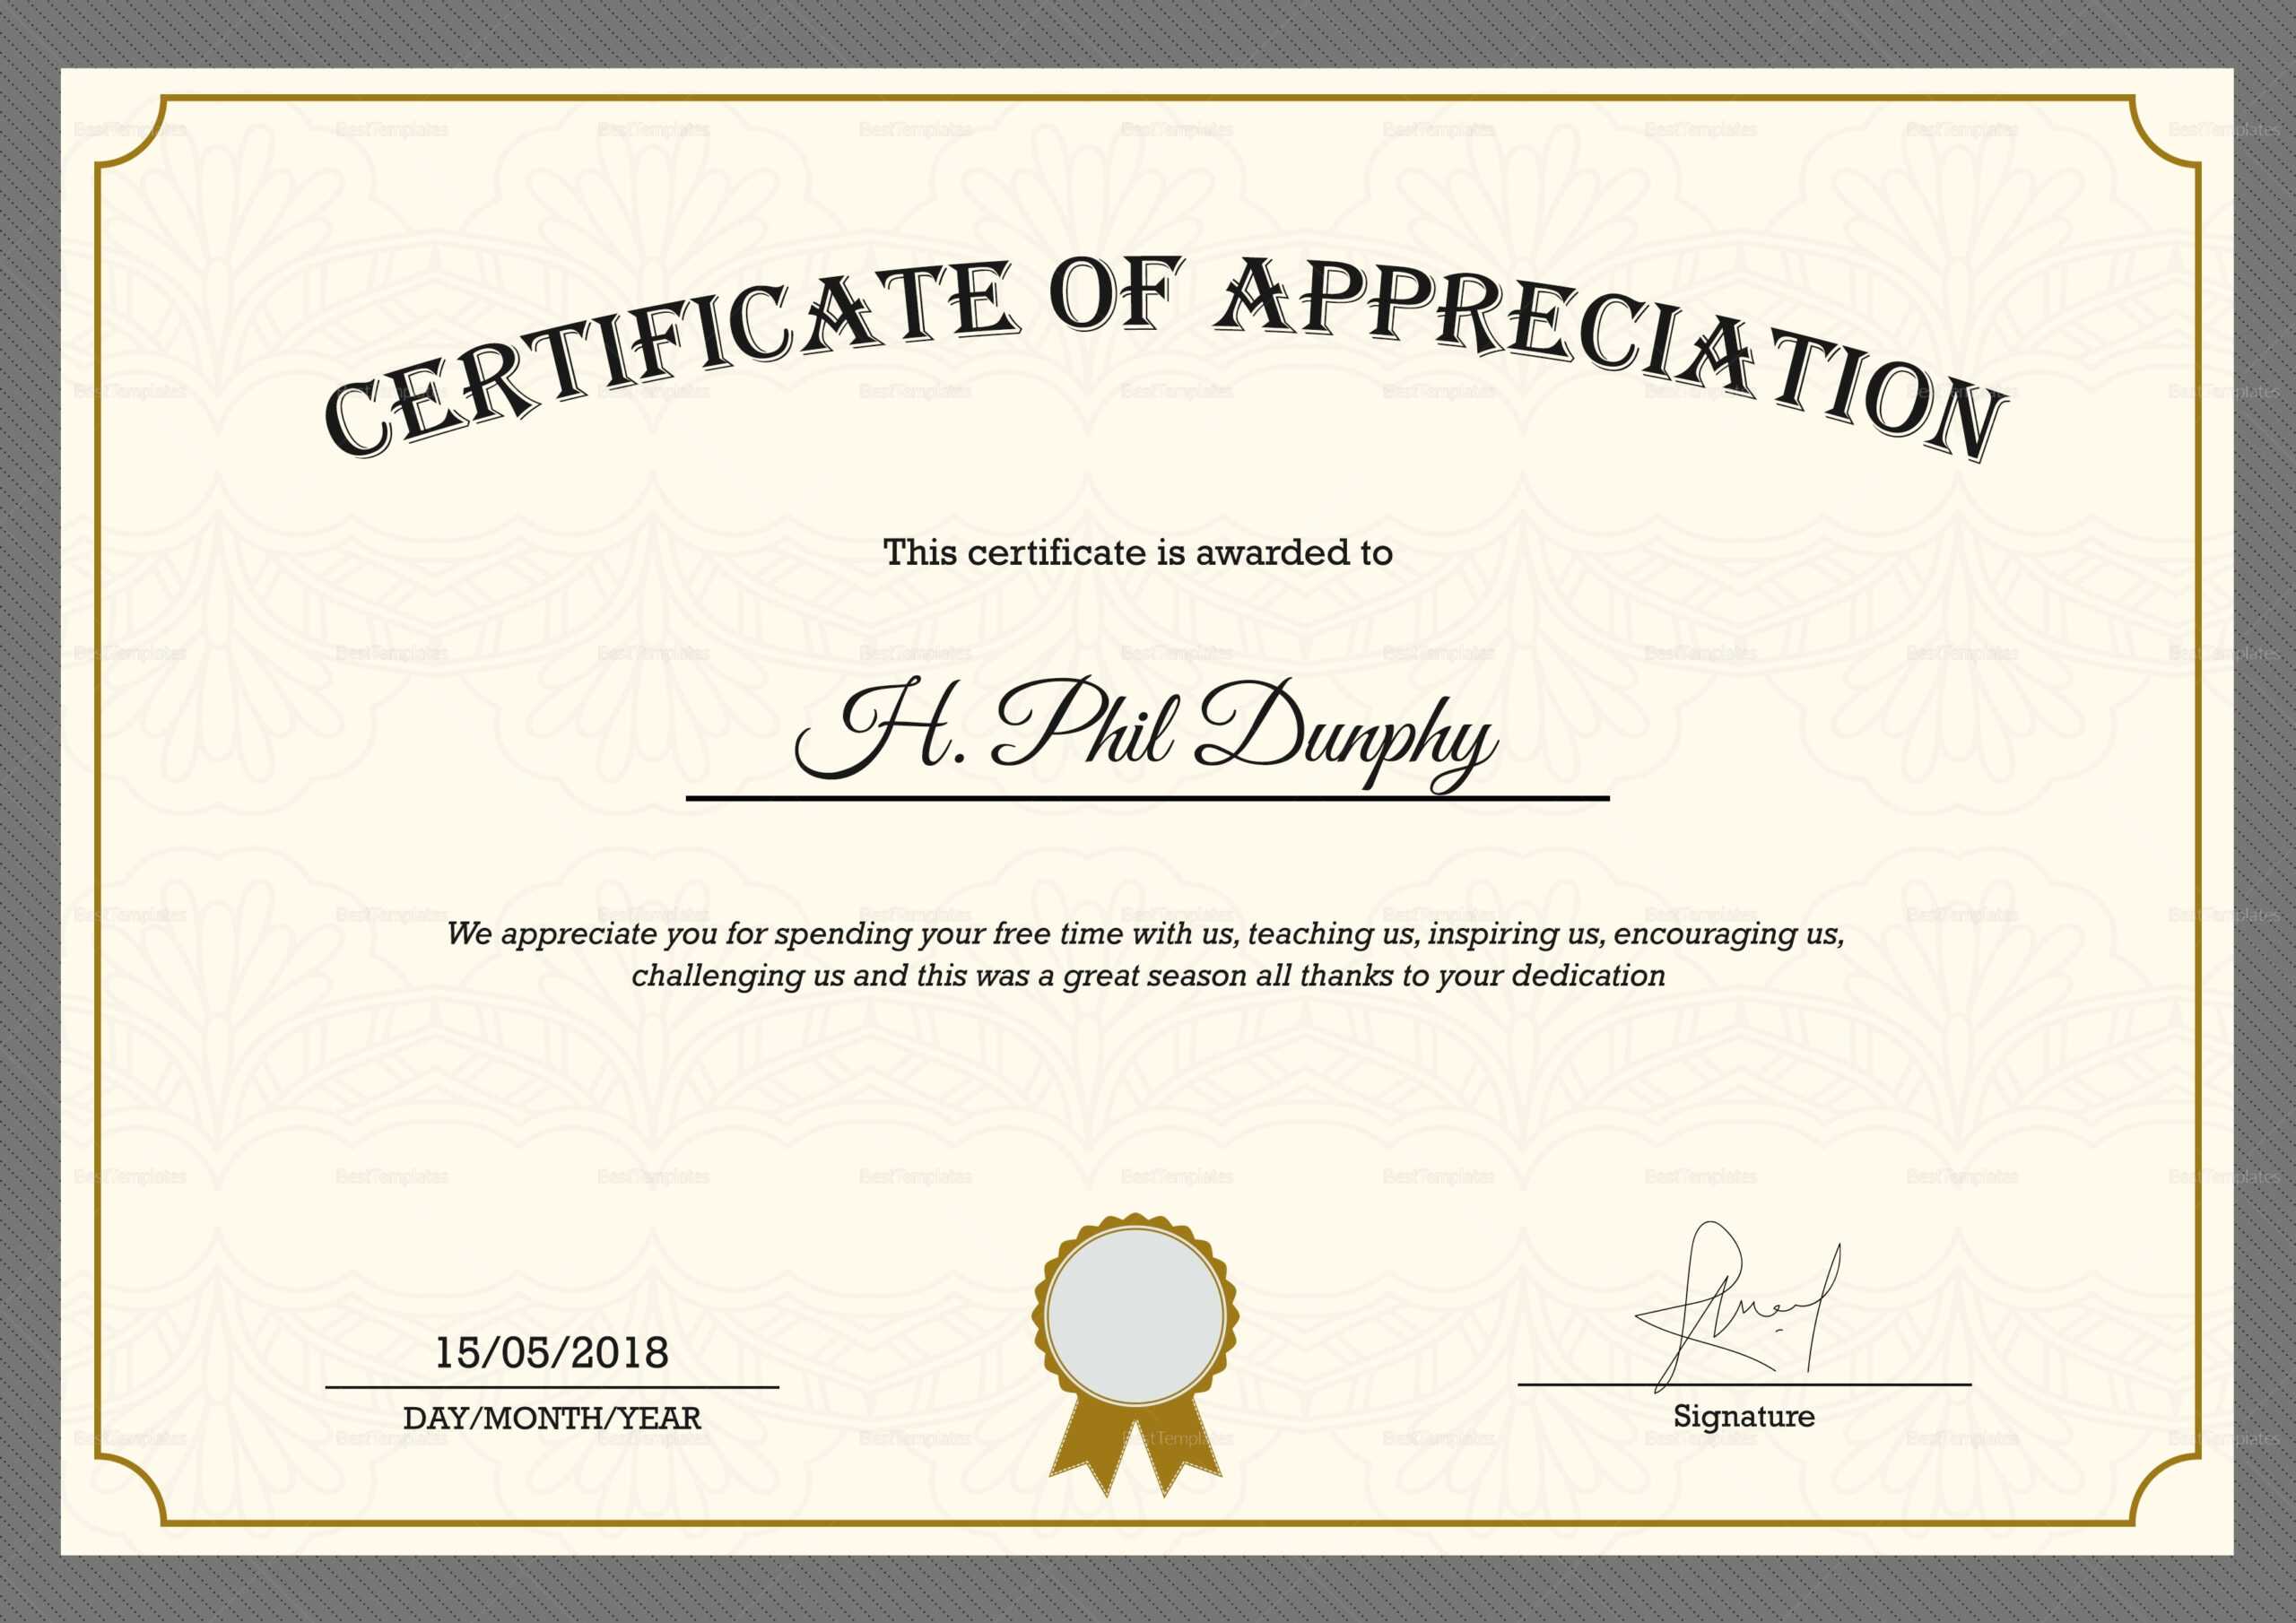 Sample Company Appreciation Certificate Template Within For Thanks Certificate Template